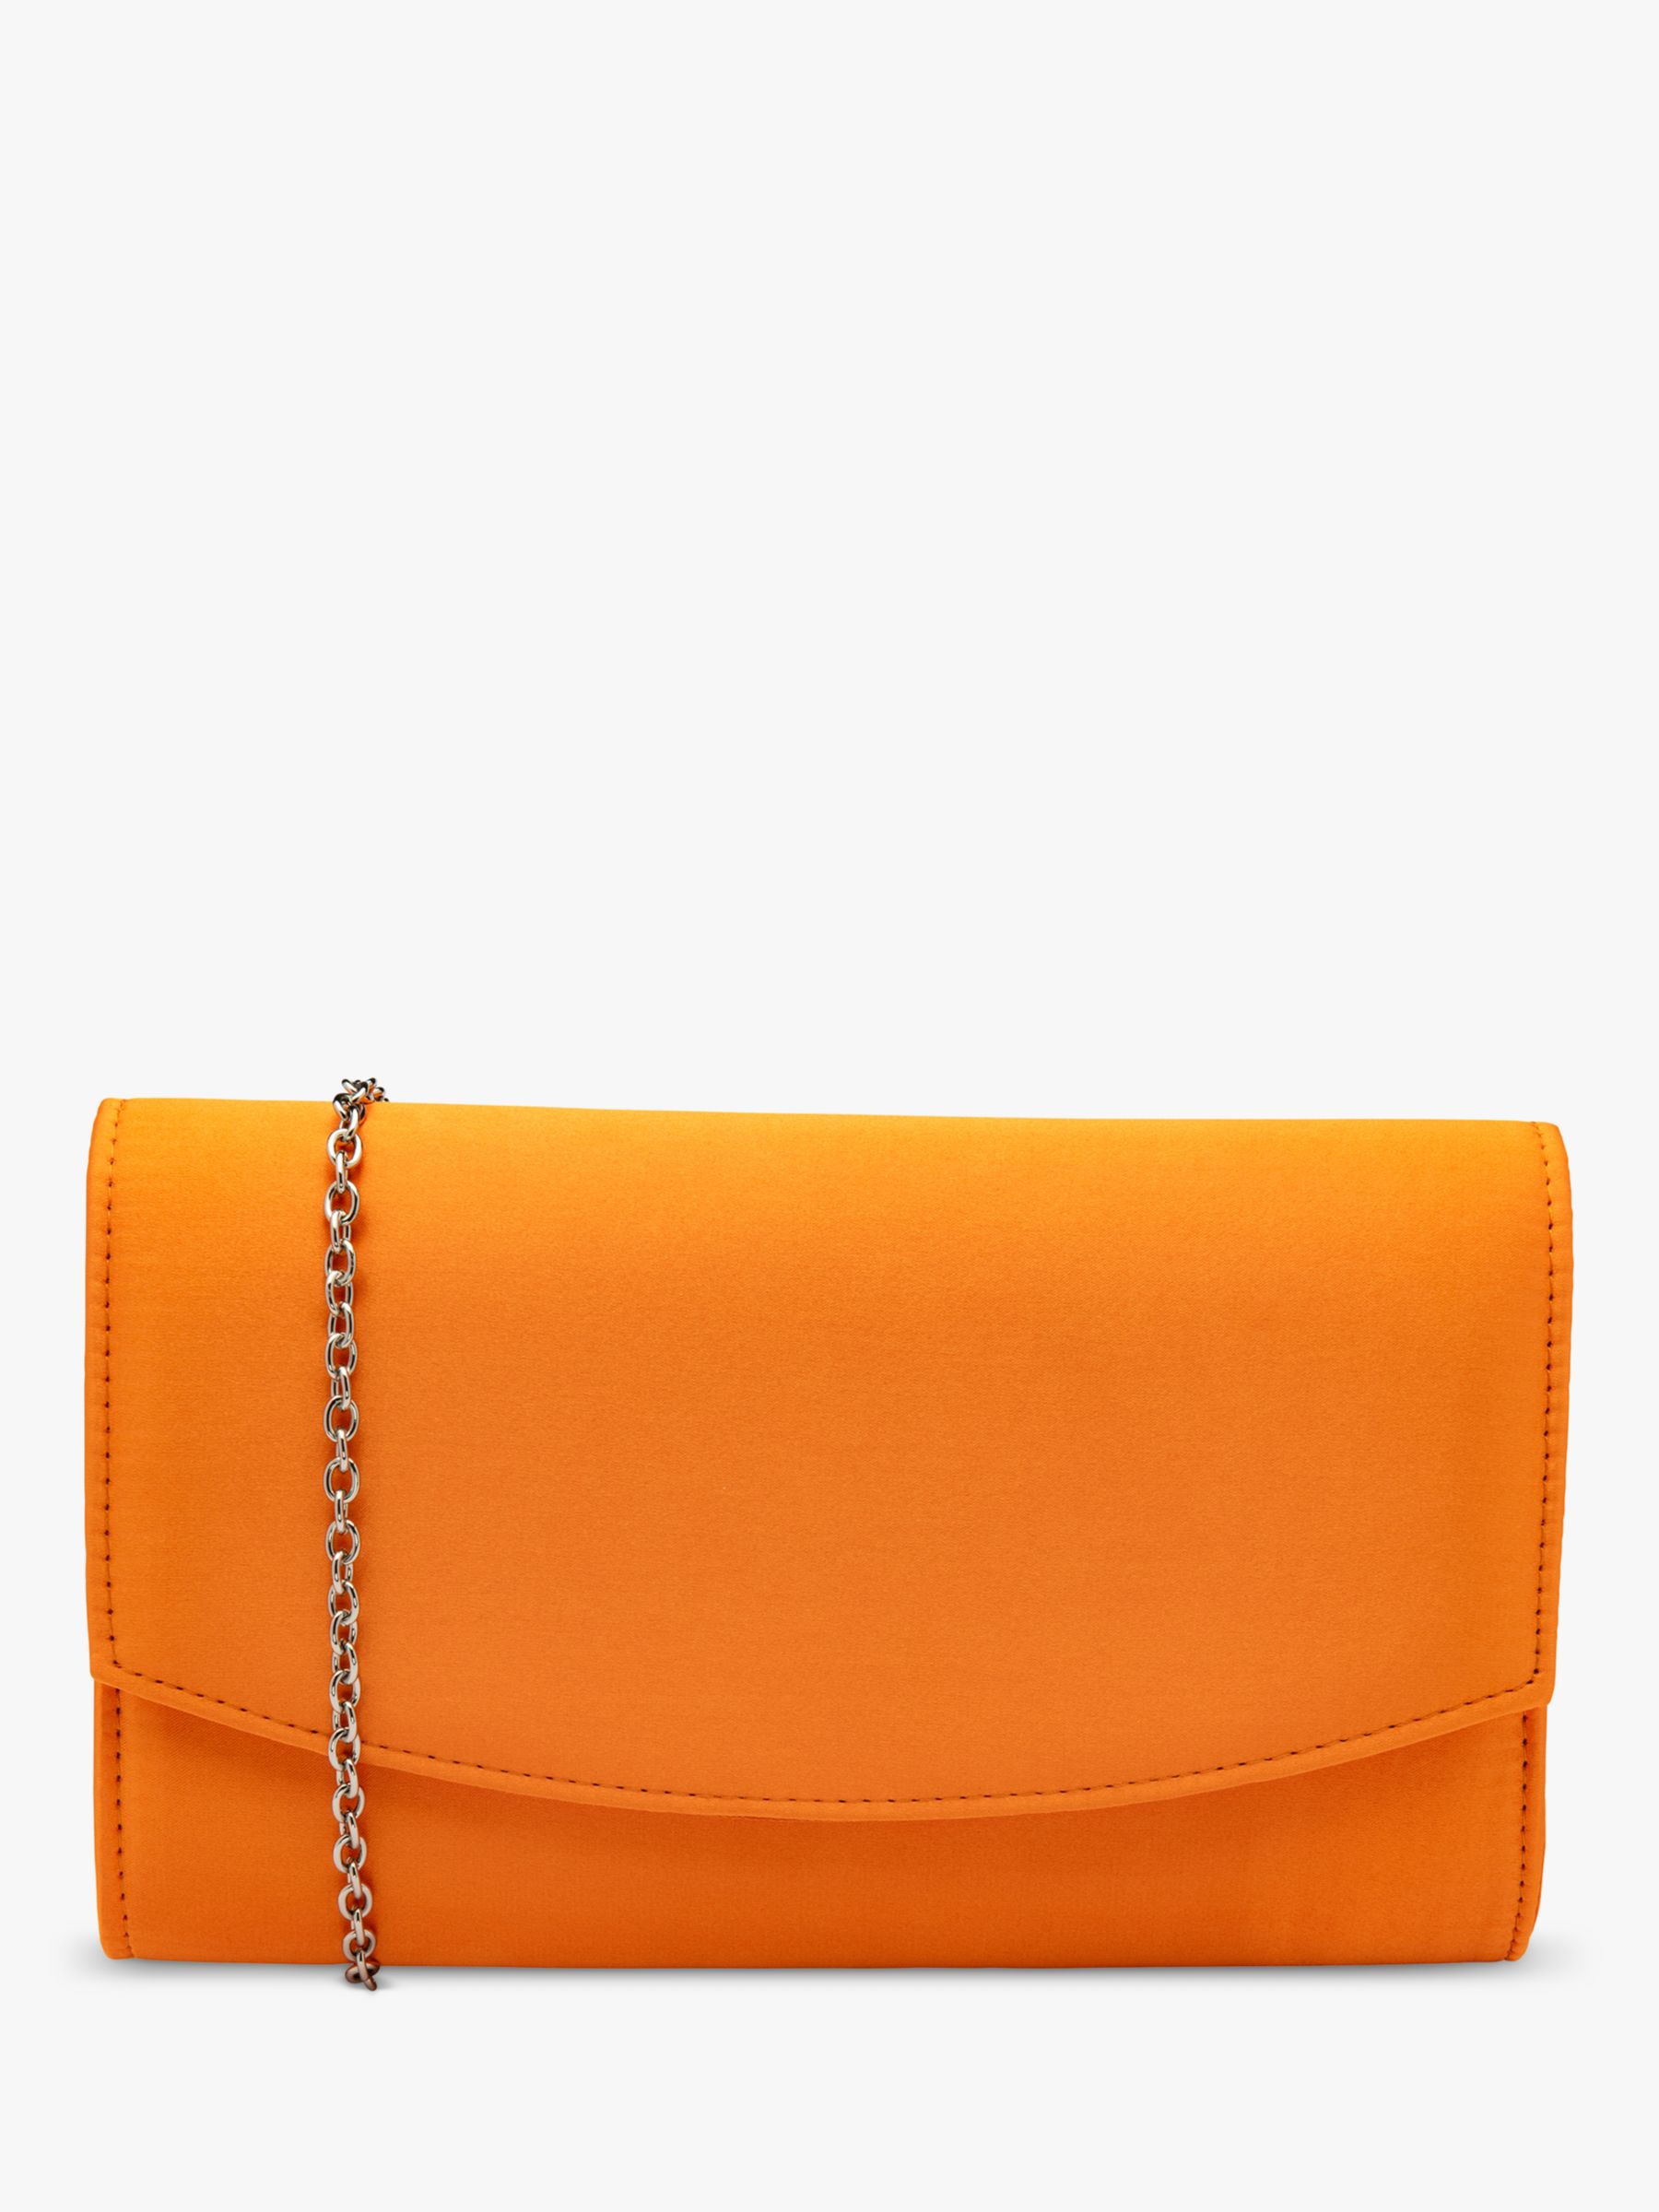 Ravel Ardee Clutch Bag, Orange, One Size